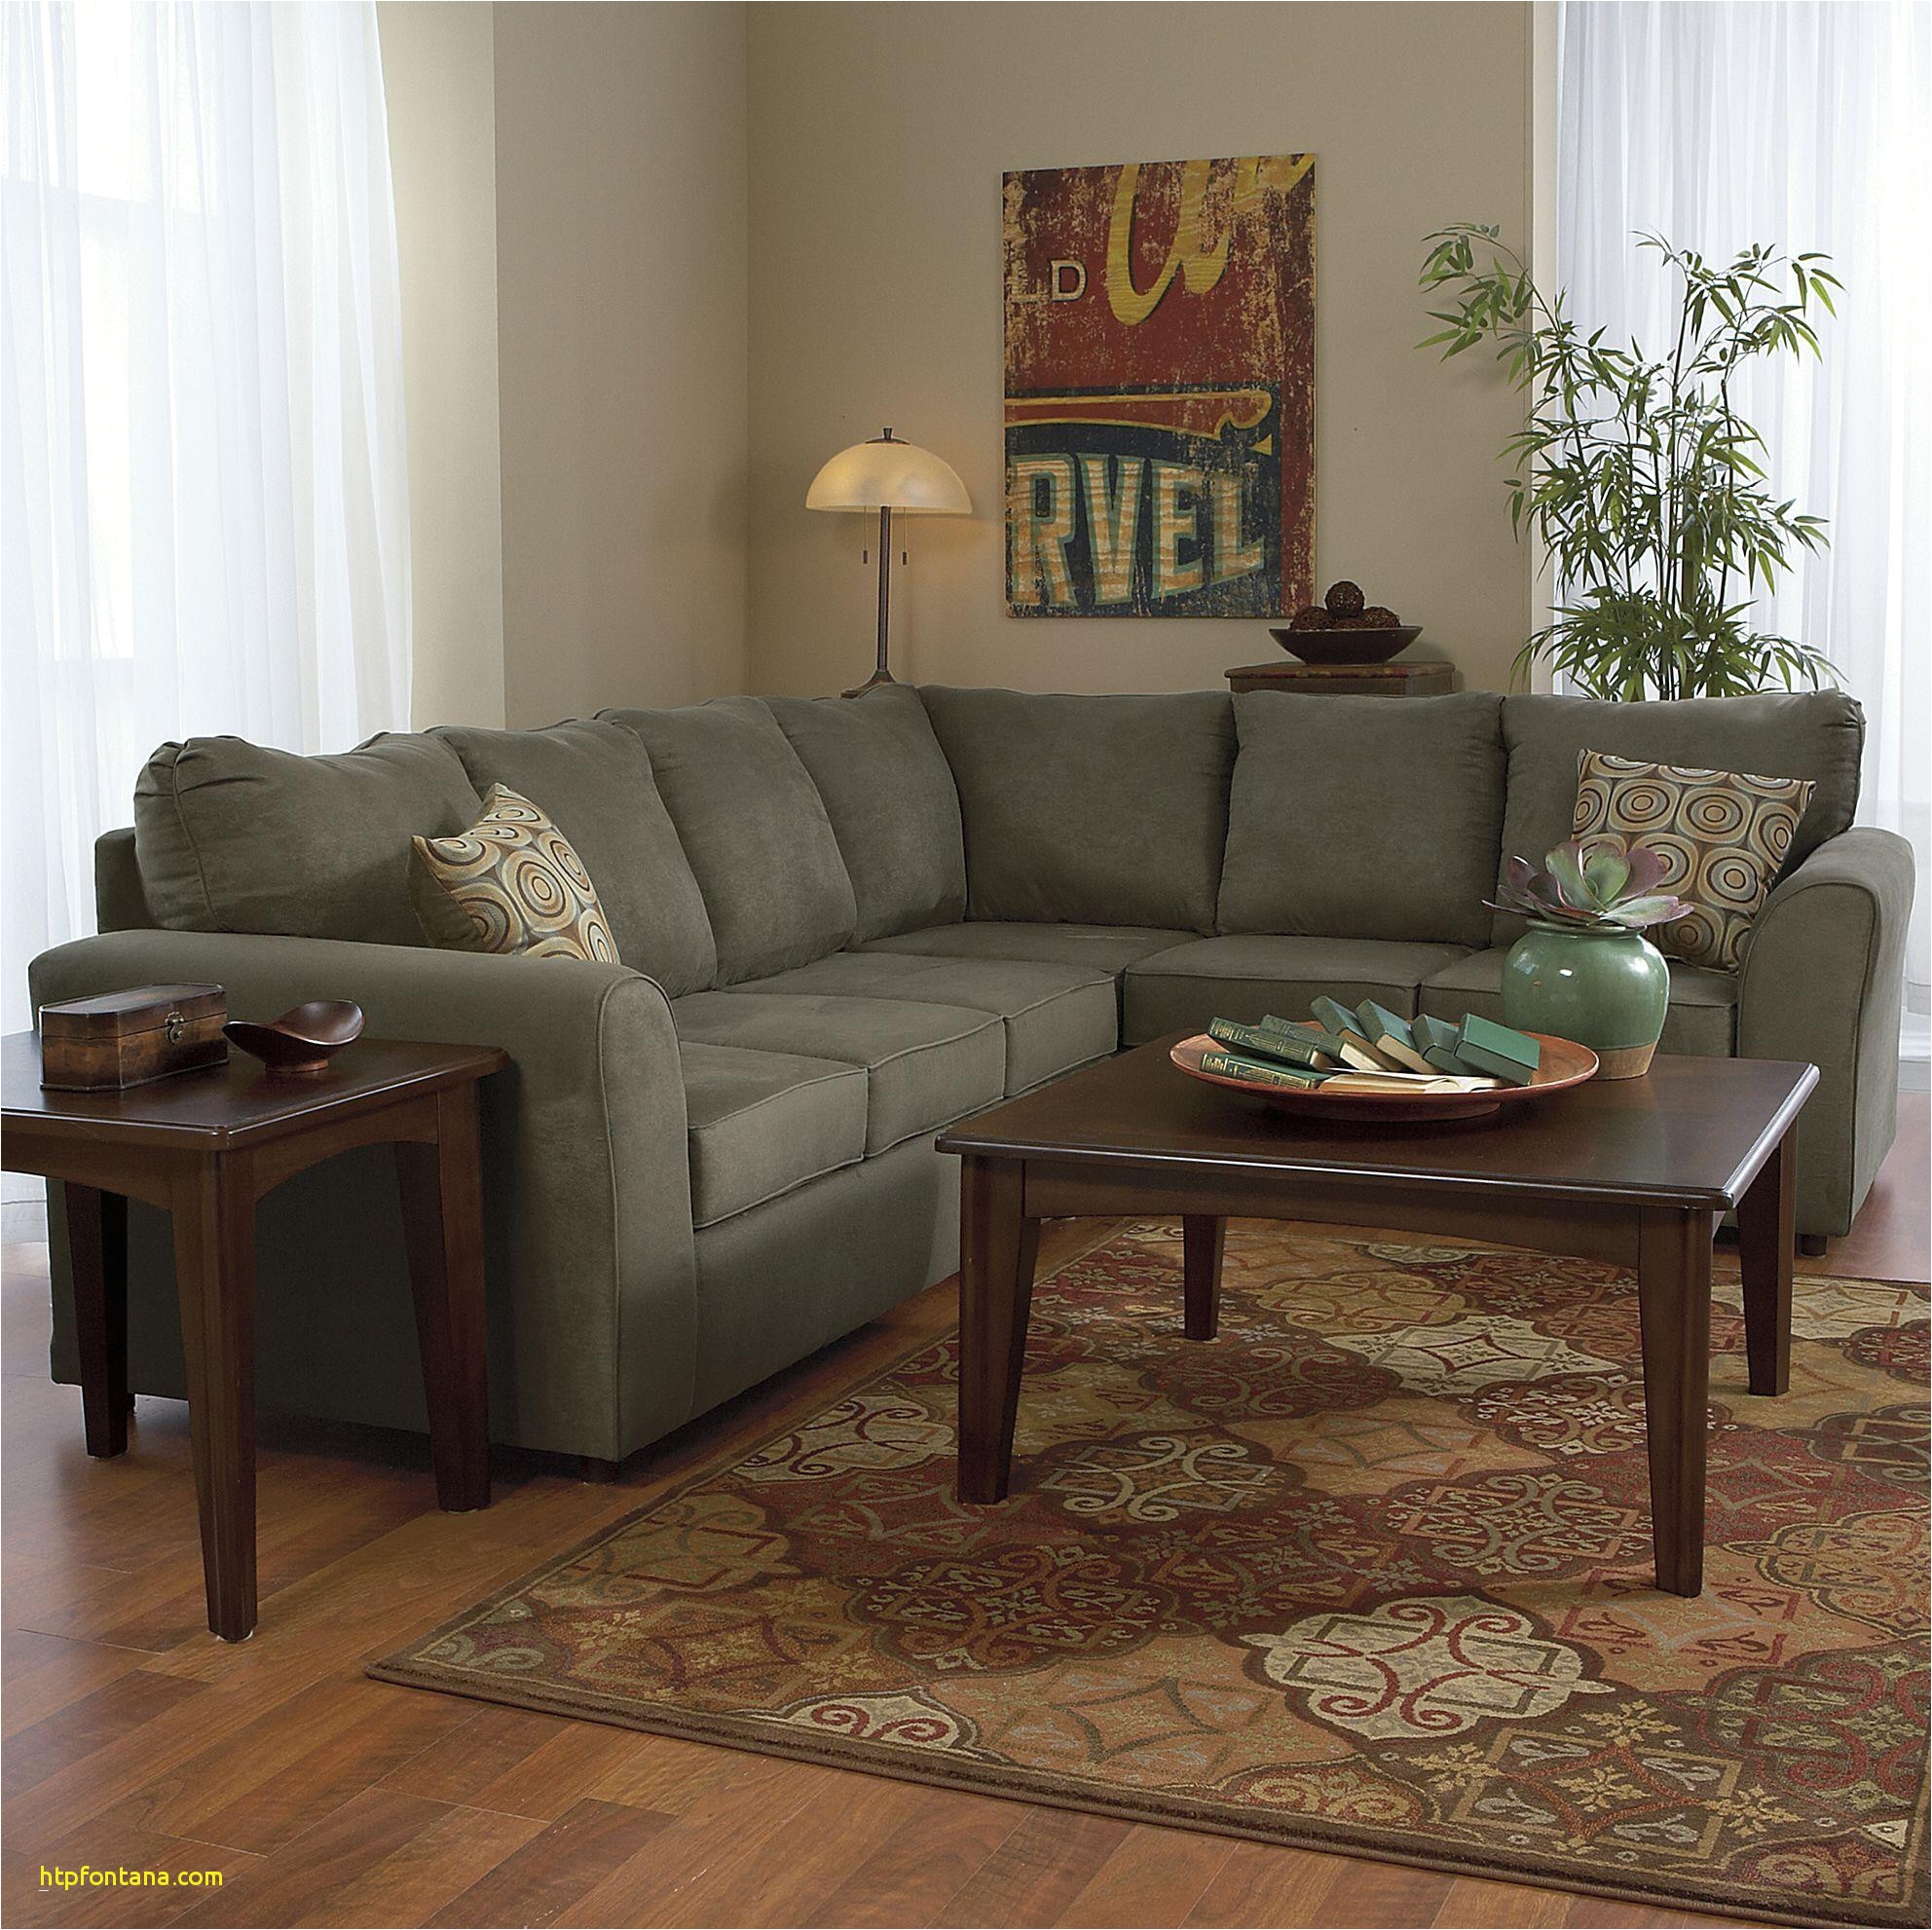 living room design image fresh furniture sleeper loveseat new wicker outdoor sofa 0d patio